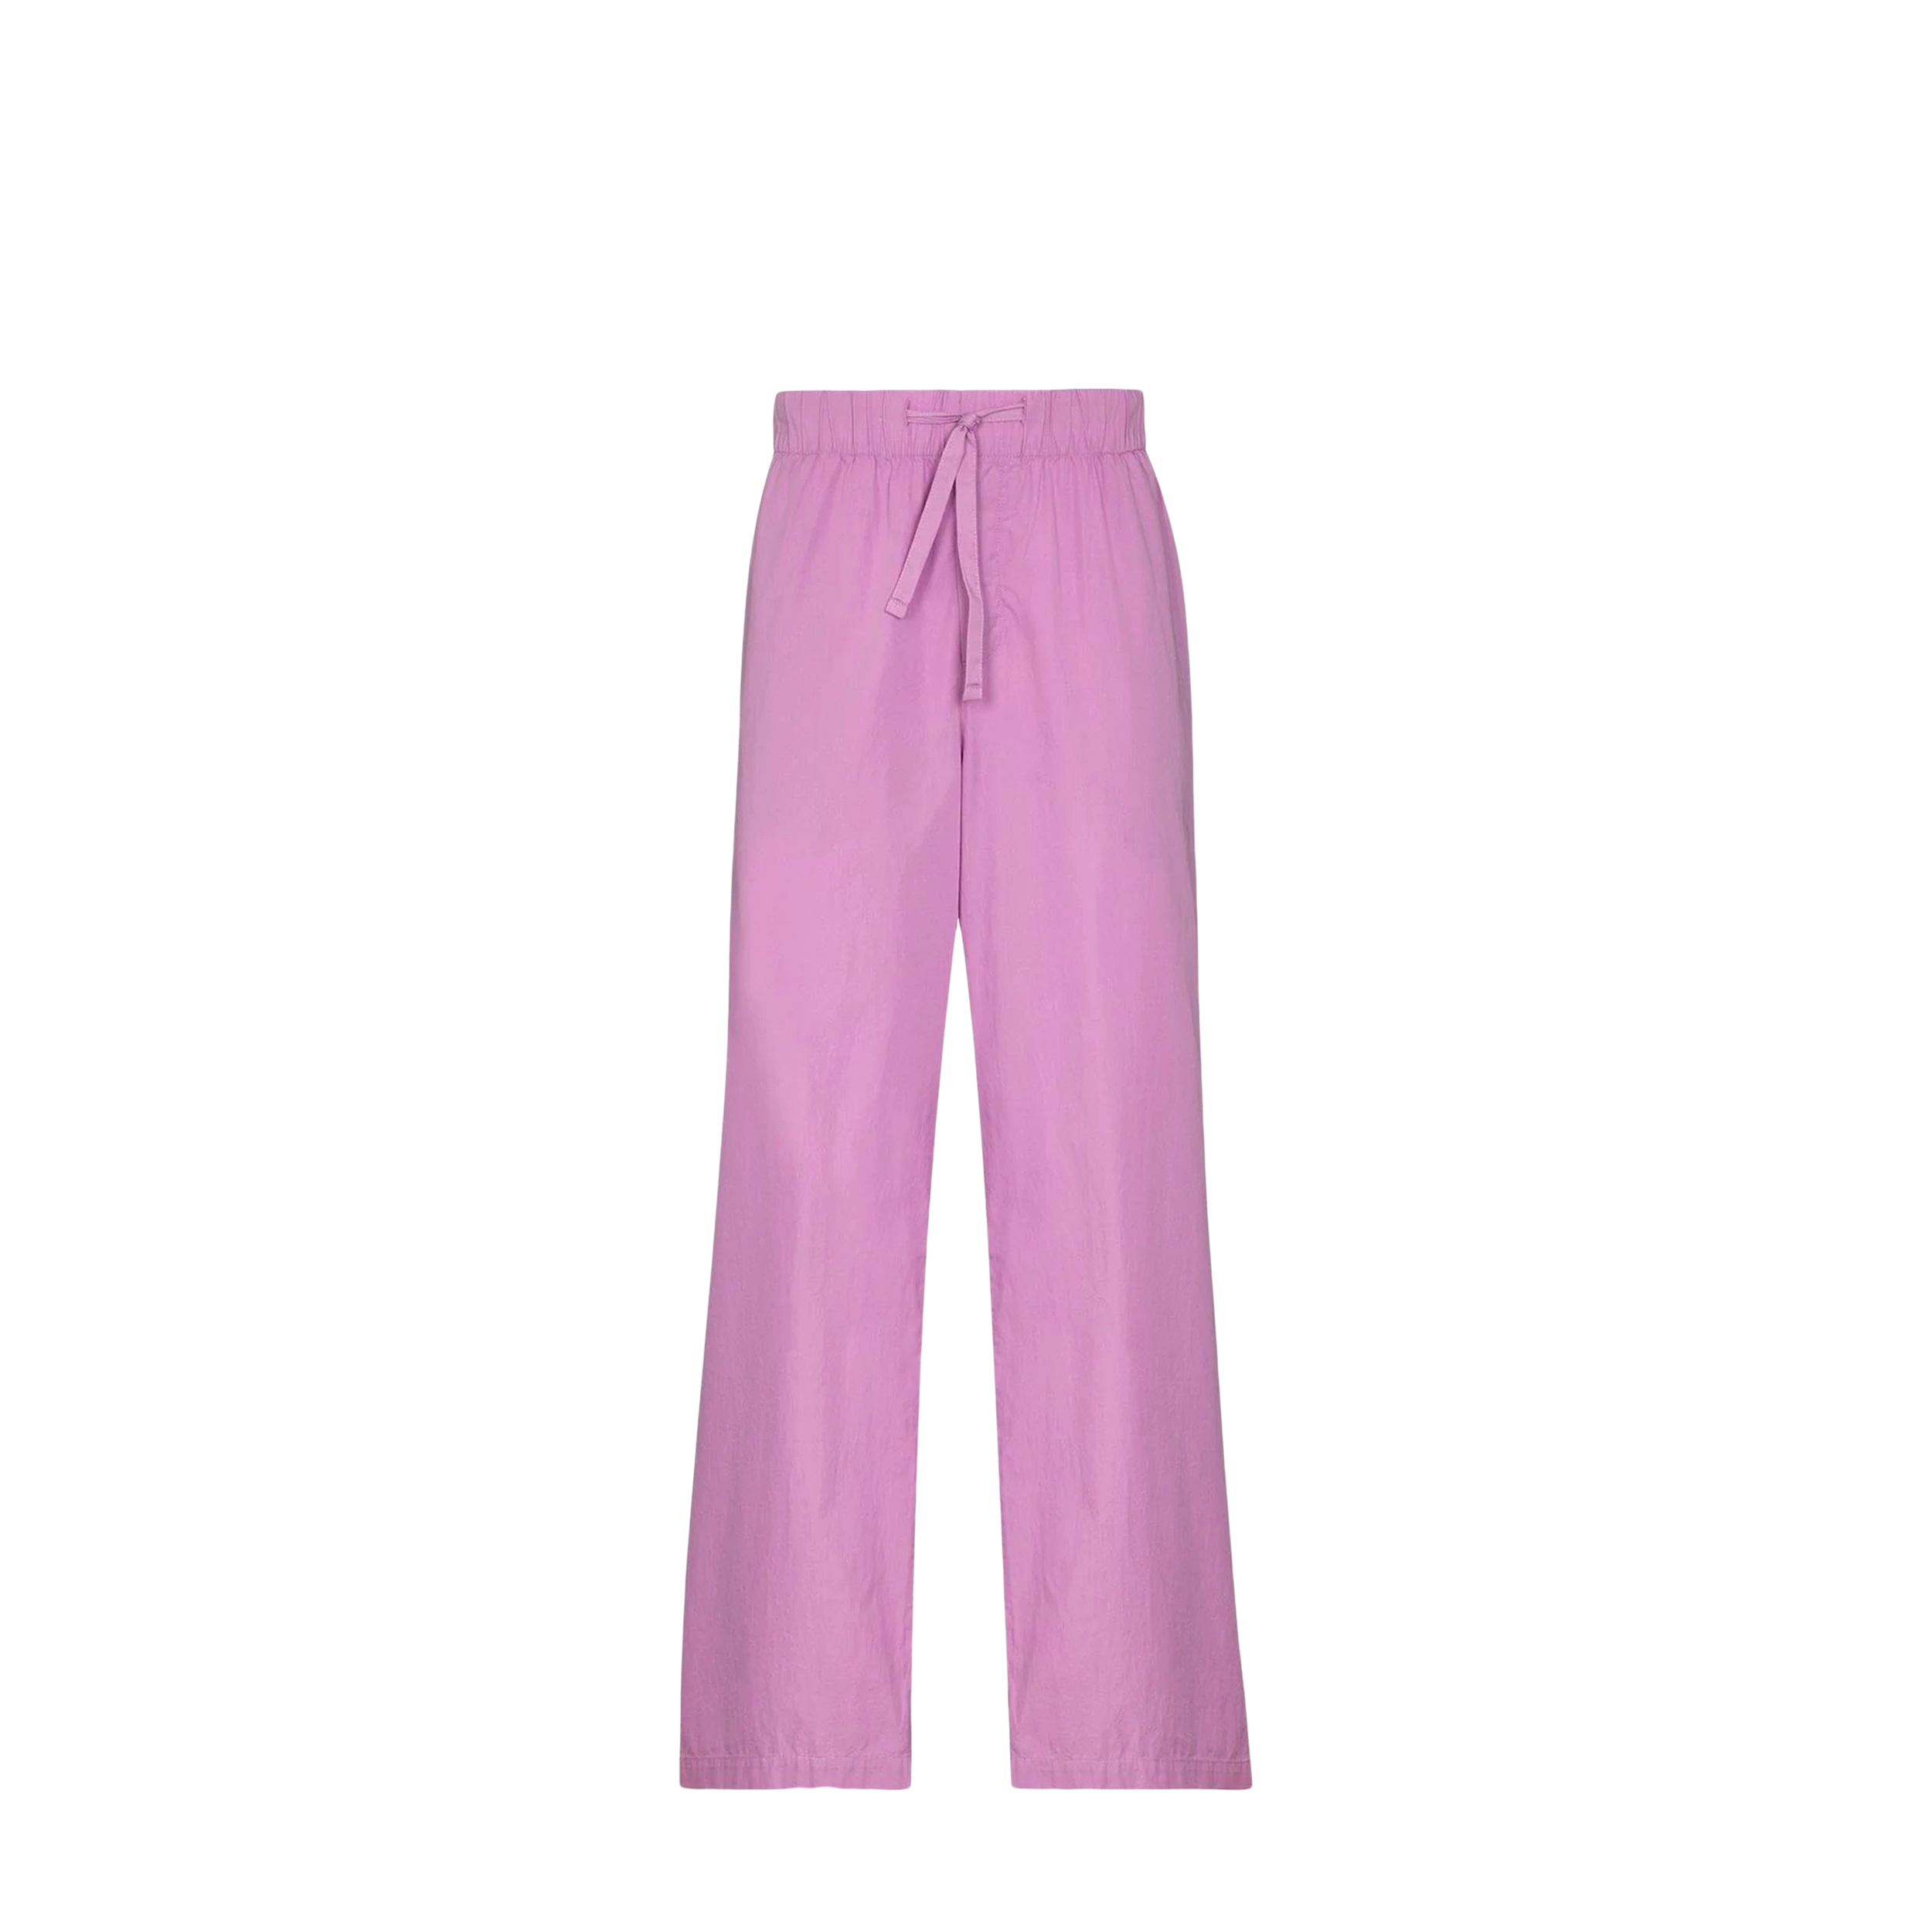 Tekla Tekla Poplin Pyjamas Pants Pink (XS) SWP-PP Poplin Pyjamas Pants Pink (XS) - фото 1